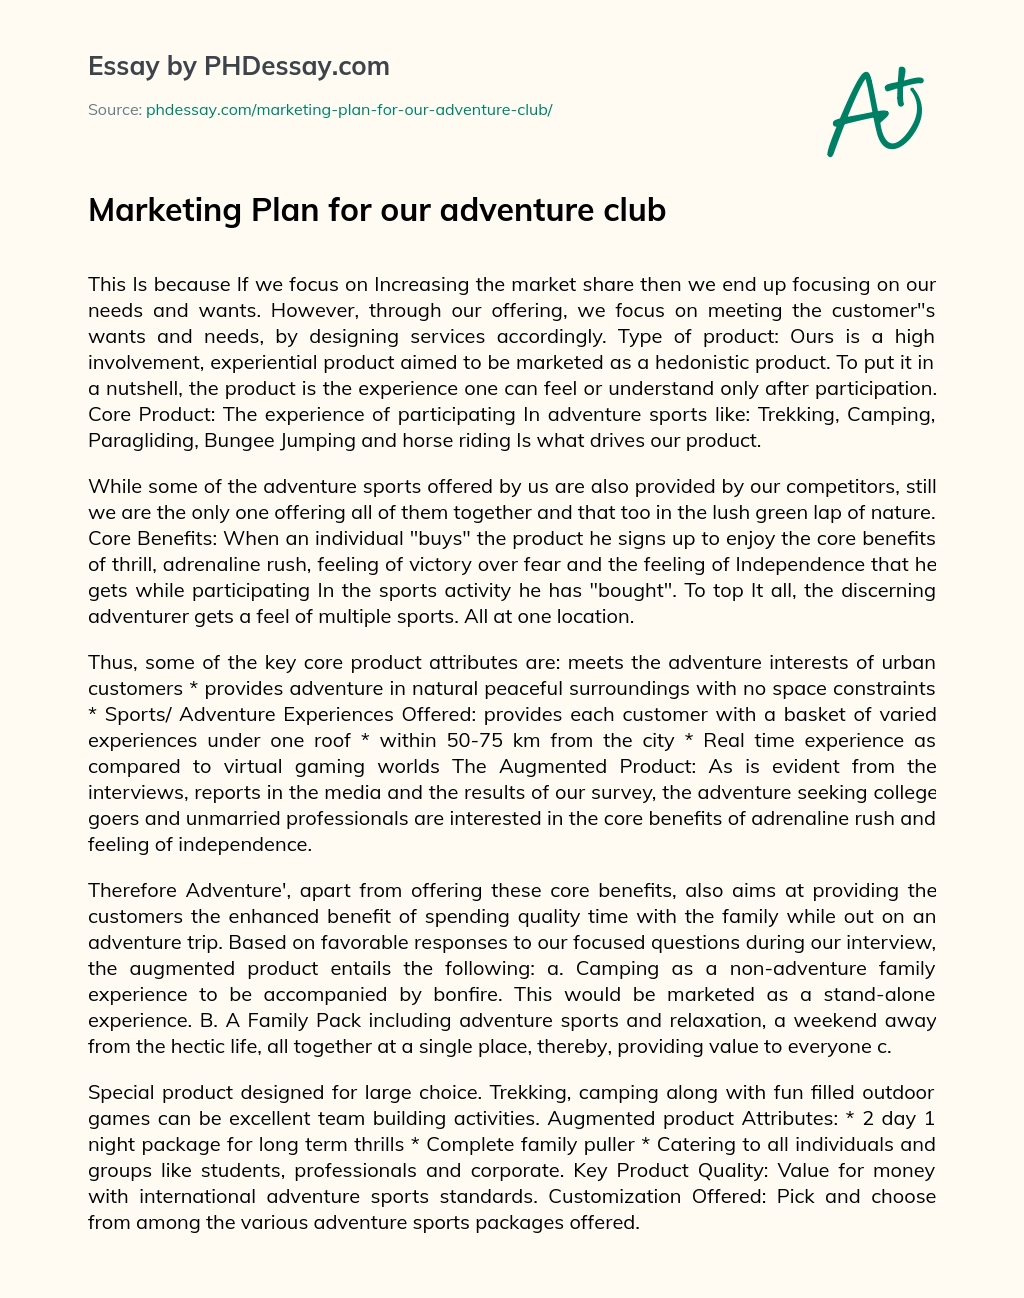 Marketing Plan for our adventure club essay